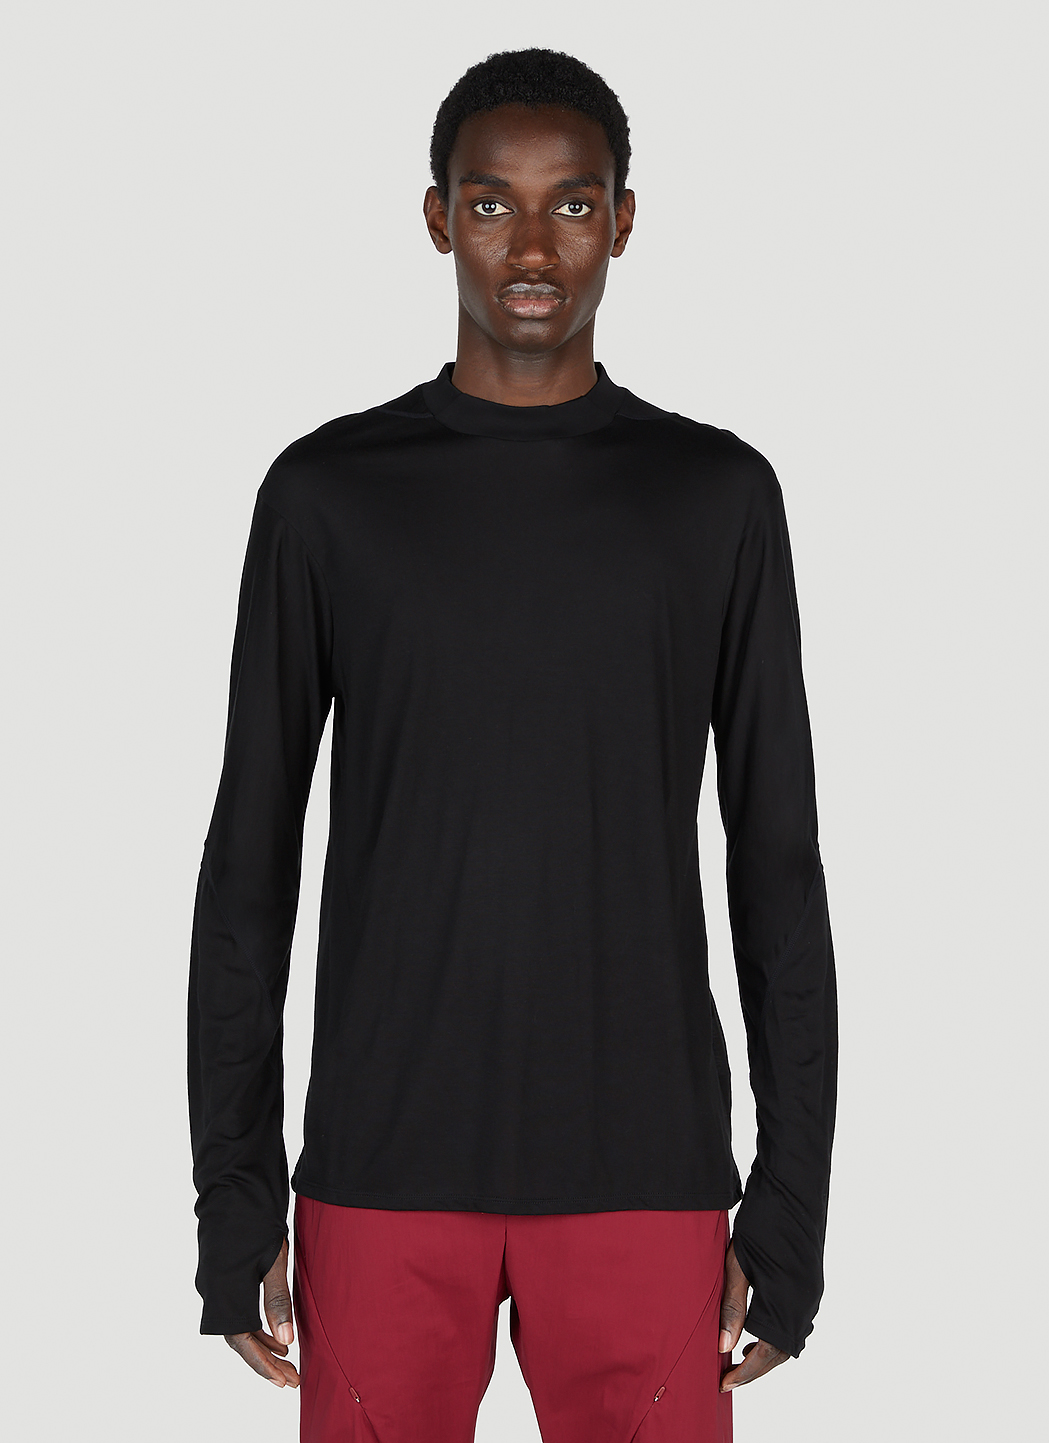 POST ARCHIVE FACTION (PAF) Men's 5.0+ Long Sleeve T-Shirt in Black 